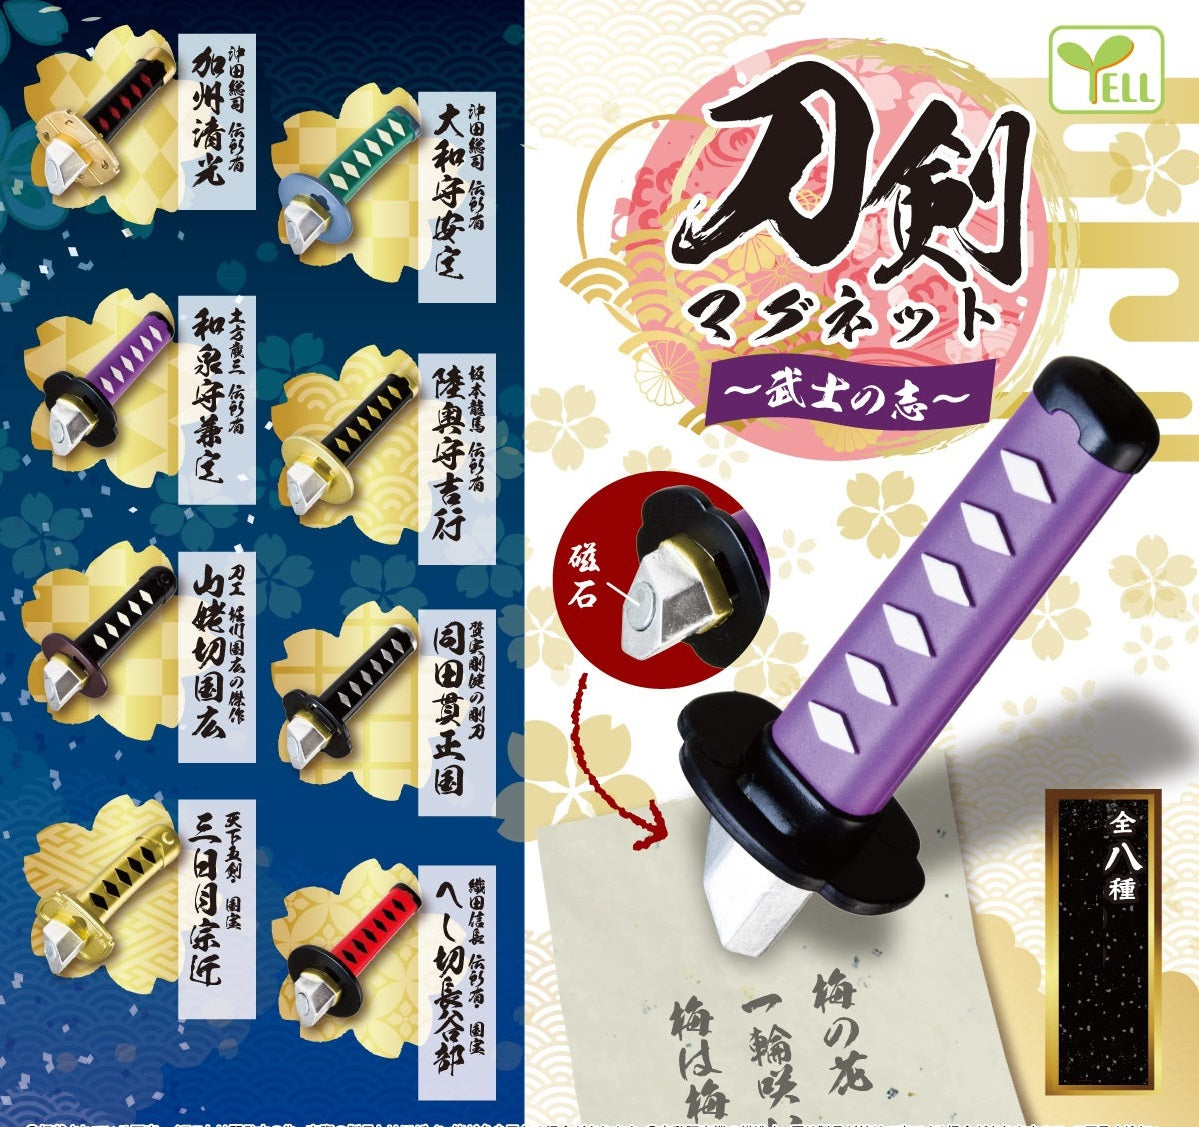 X 70903 Samurai Katana Sword Magnet Capsule-DISCONTINUED